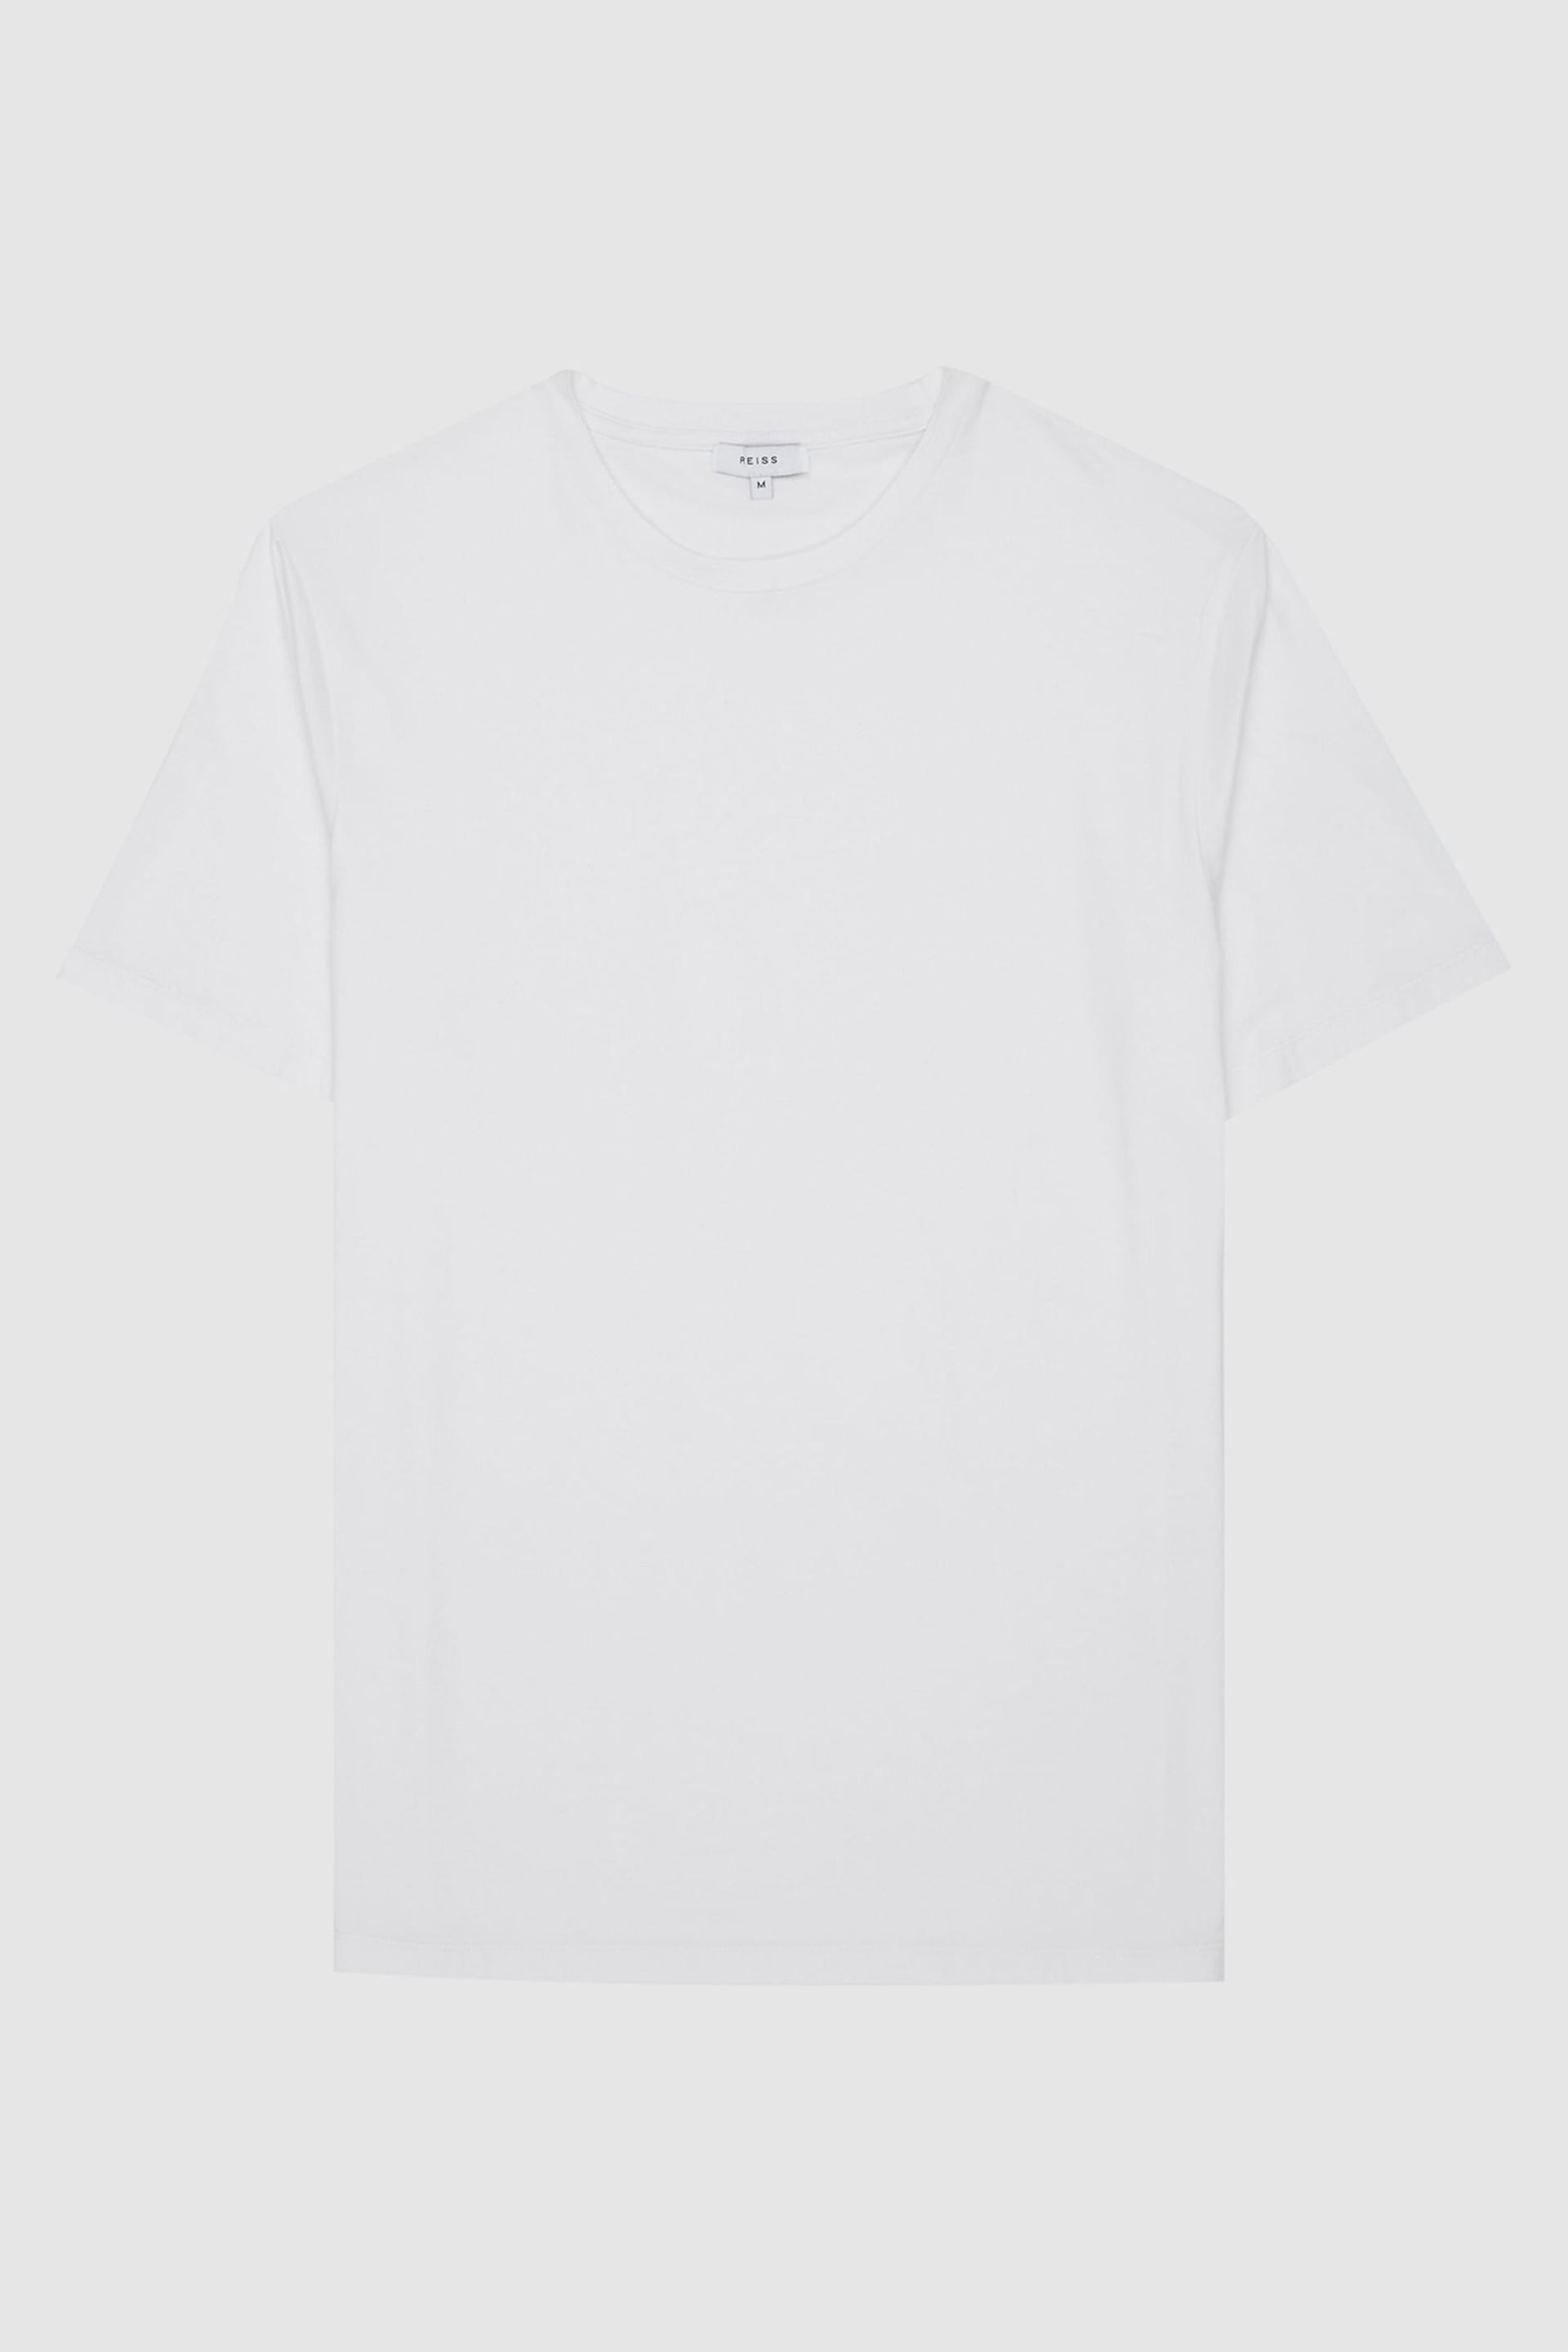 Reiss White Bless Crew Neck T-Shirt - Image 2 of 7